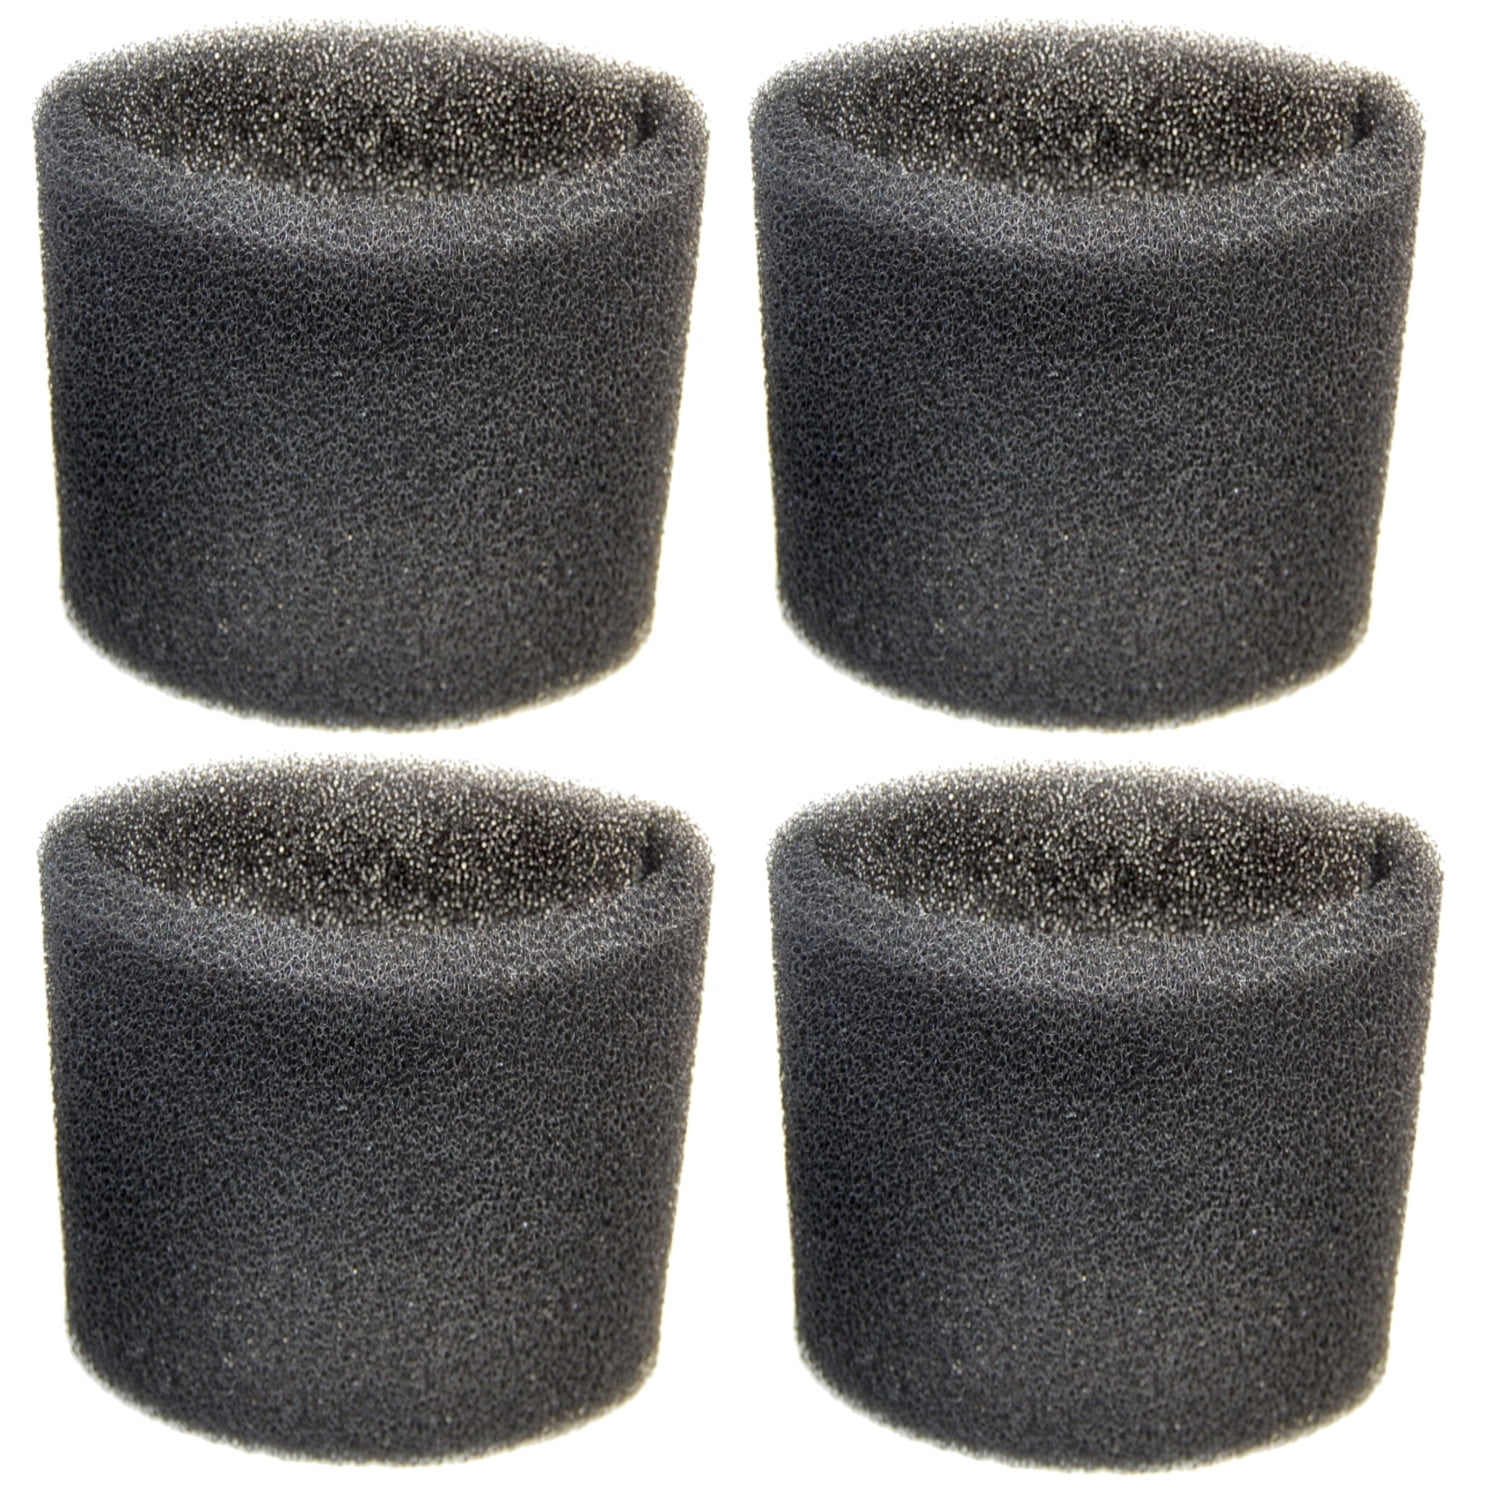 4x Foam Filter Sleeves for Shop-Vac 2E200 2E150 5010 5015 5020 5025 5275 2010 